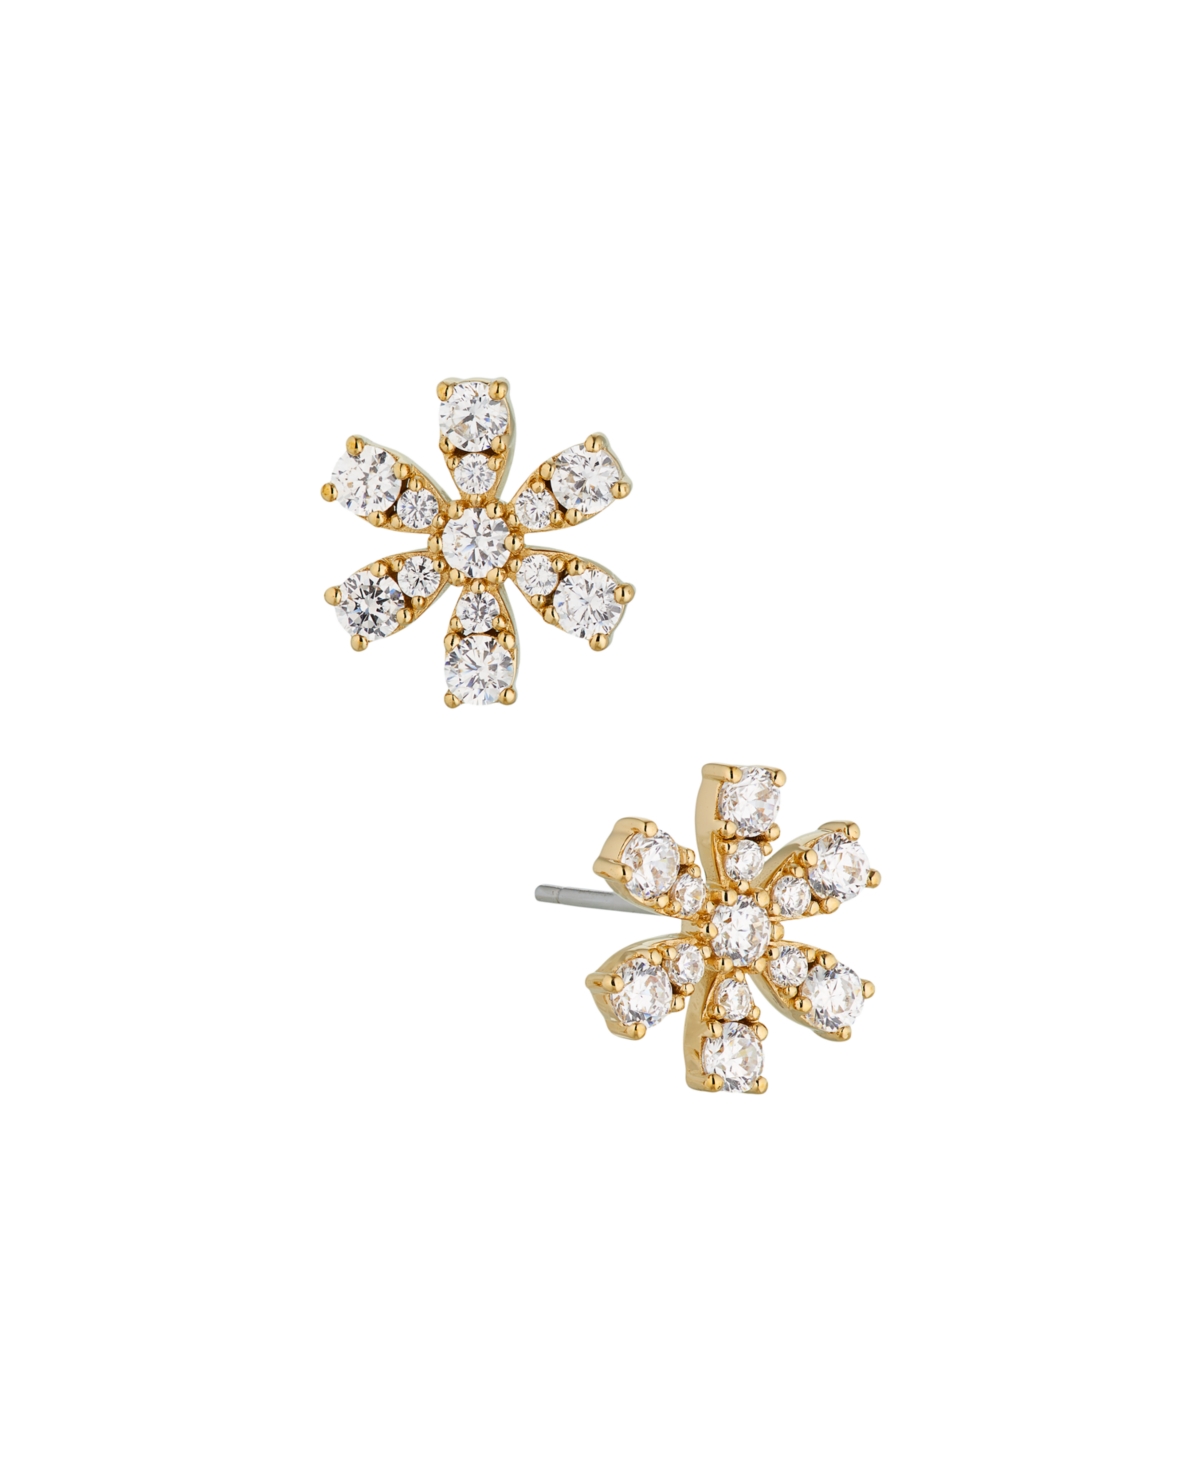 Eliot Danori Cubic Zirconia Flower Stud Earrings, Created for Macy's